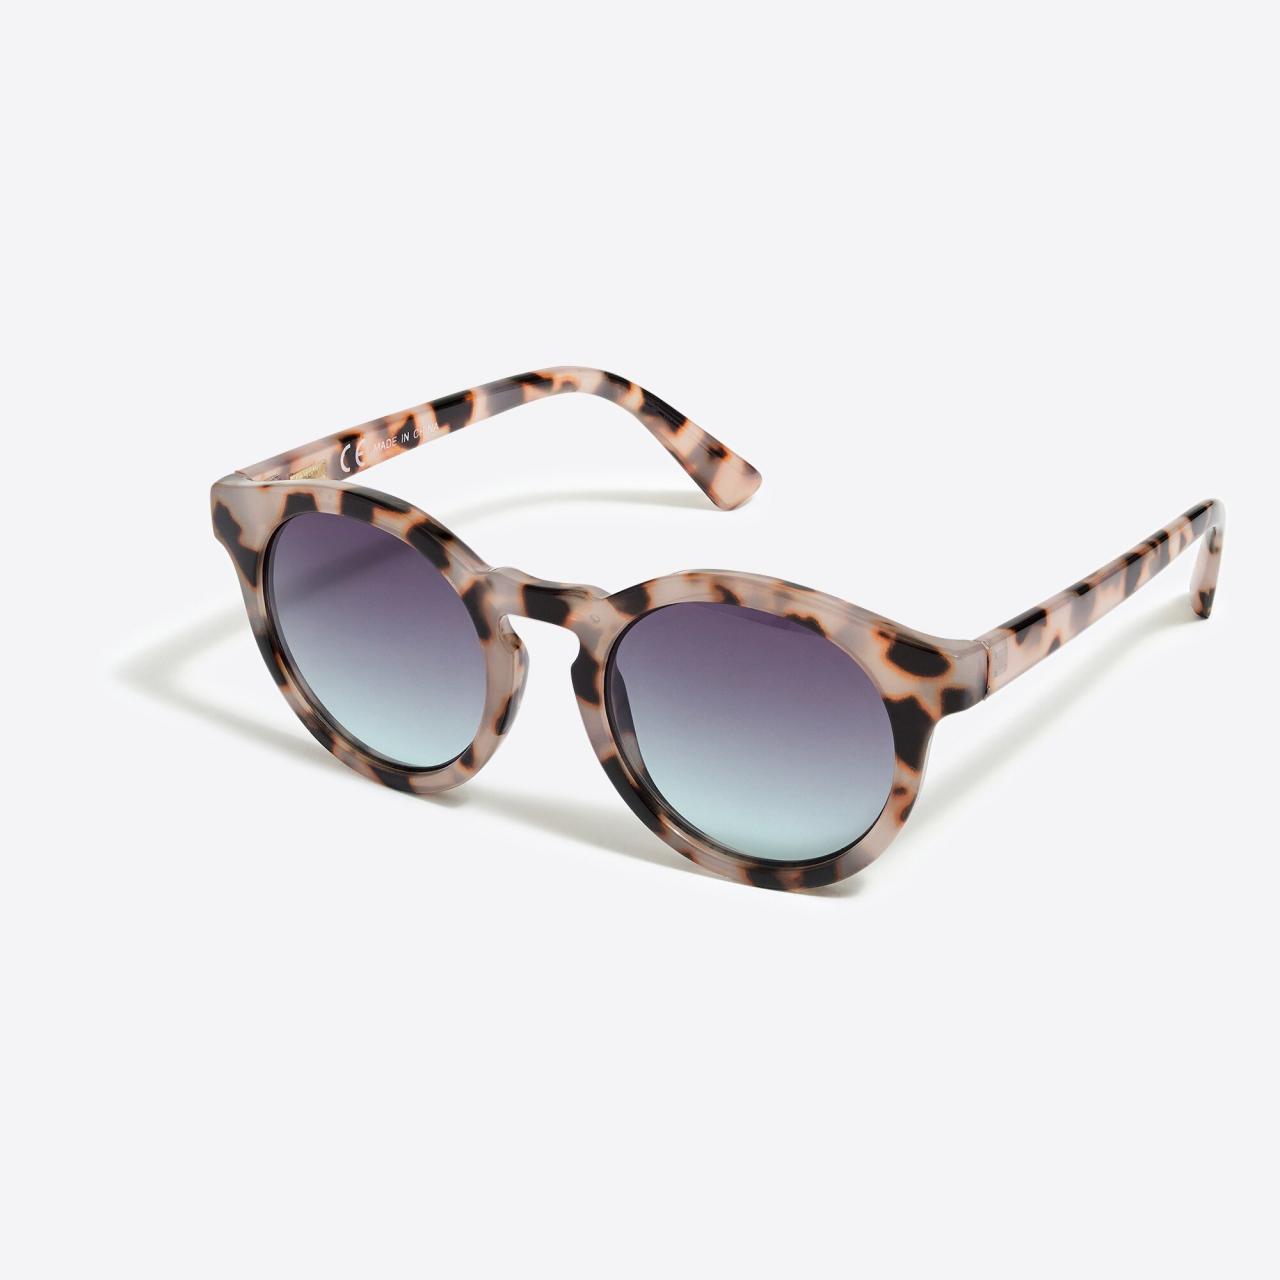 keyhole sunglasses : factorywomen sunglasses & eyeglasses